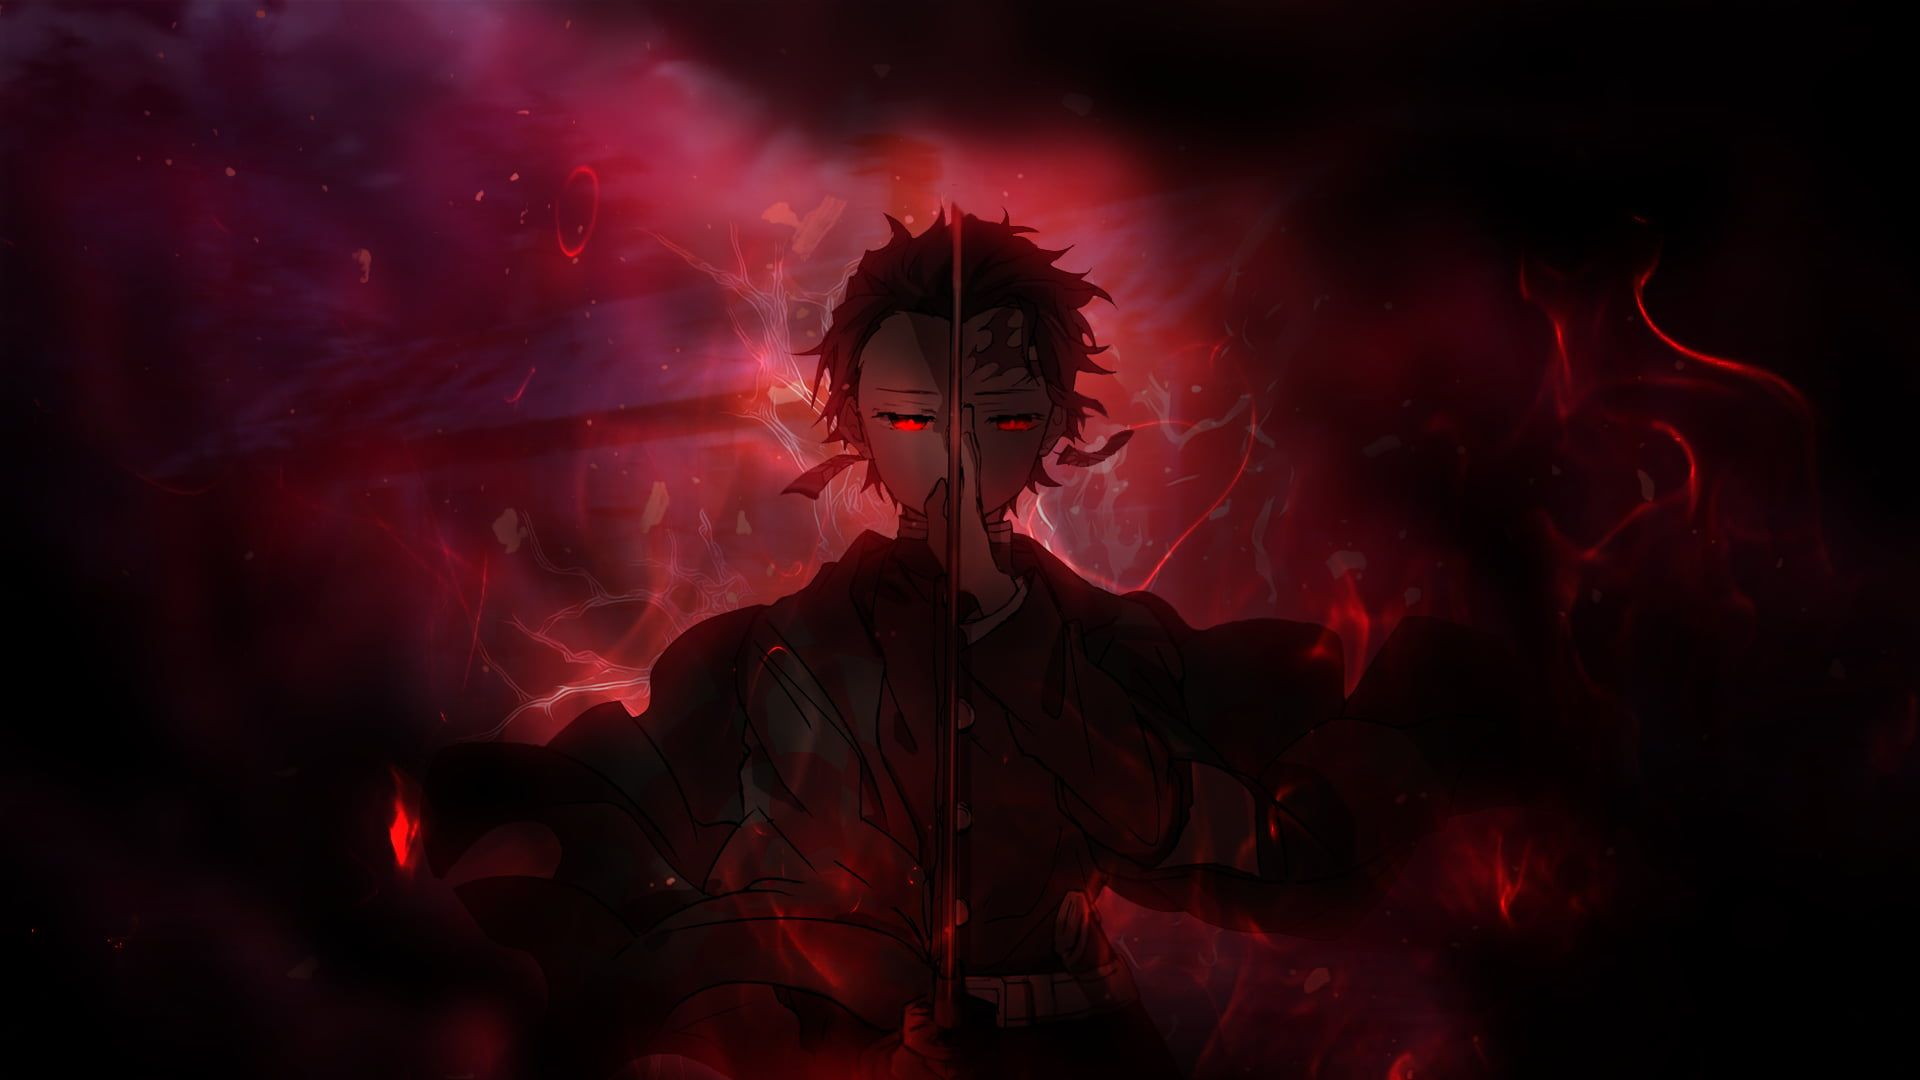 #Anime Demon Slayer: Kimetsu No Yaiba Tanjirou Kamado #1080P #Wallpaper à Fond D Écran Demon Slayer Tanjiro